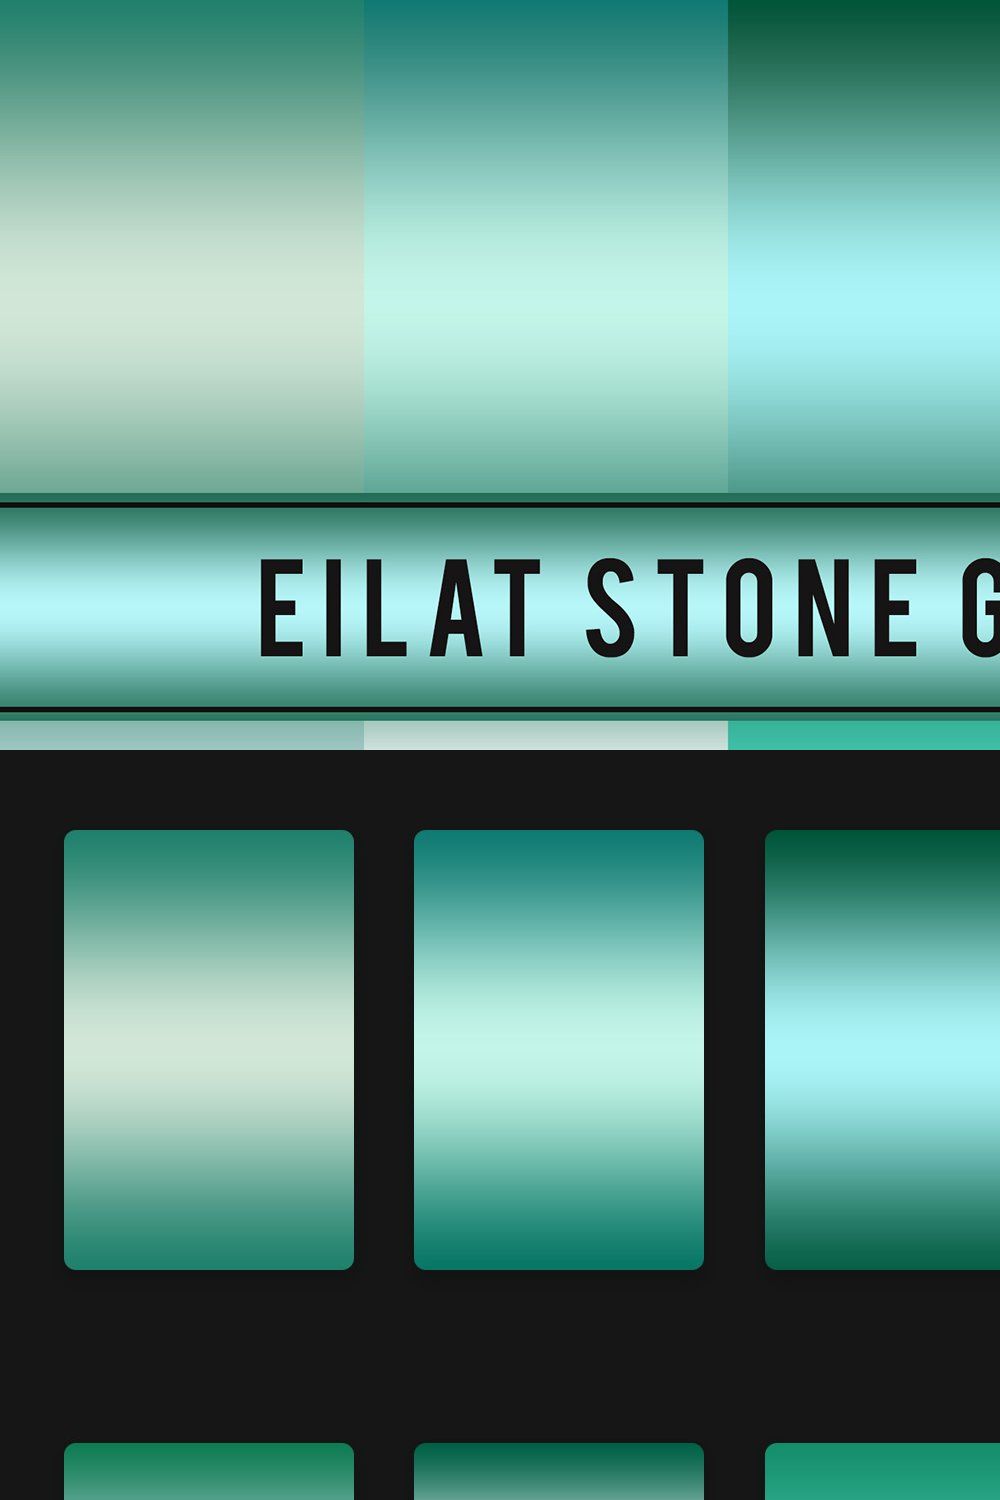 Eilat Stone Gradients pinterest preview image.